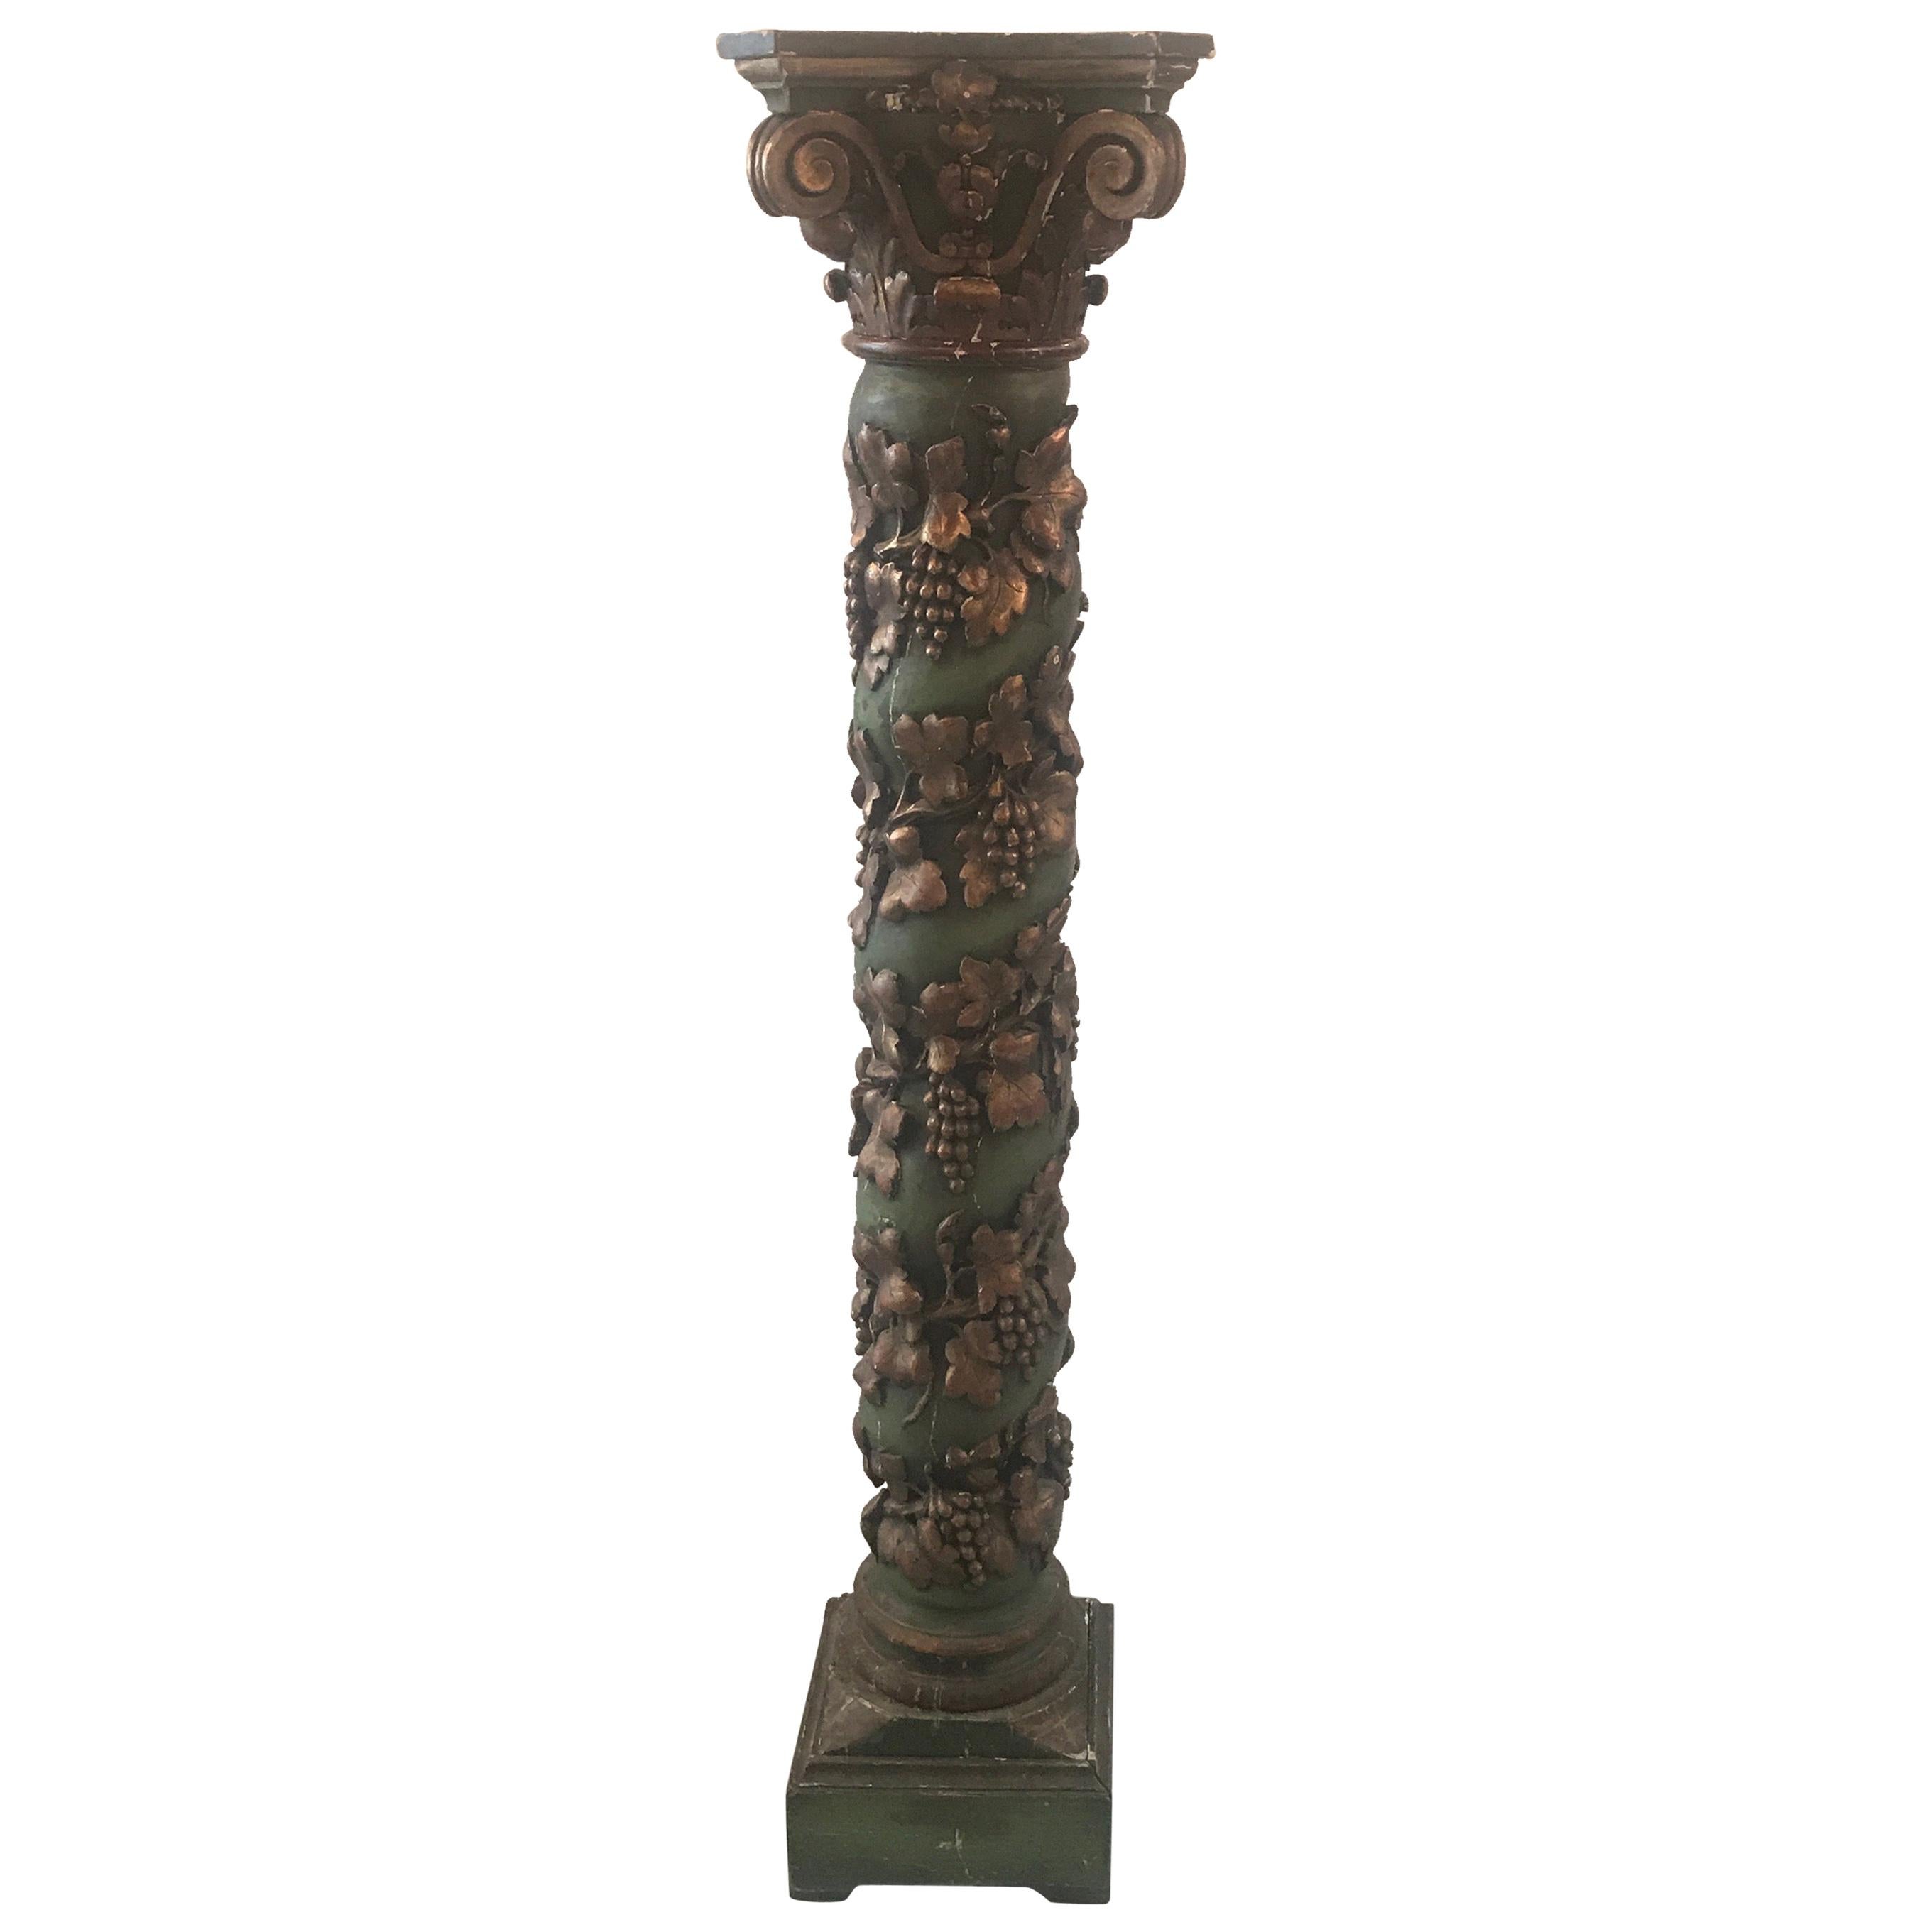 19th Century Italian Carved Oak Painted Pedestal Column